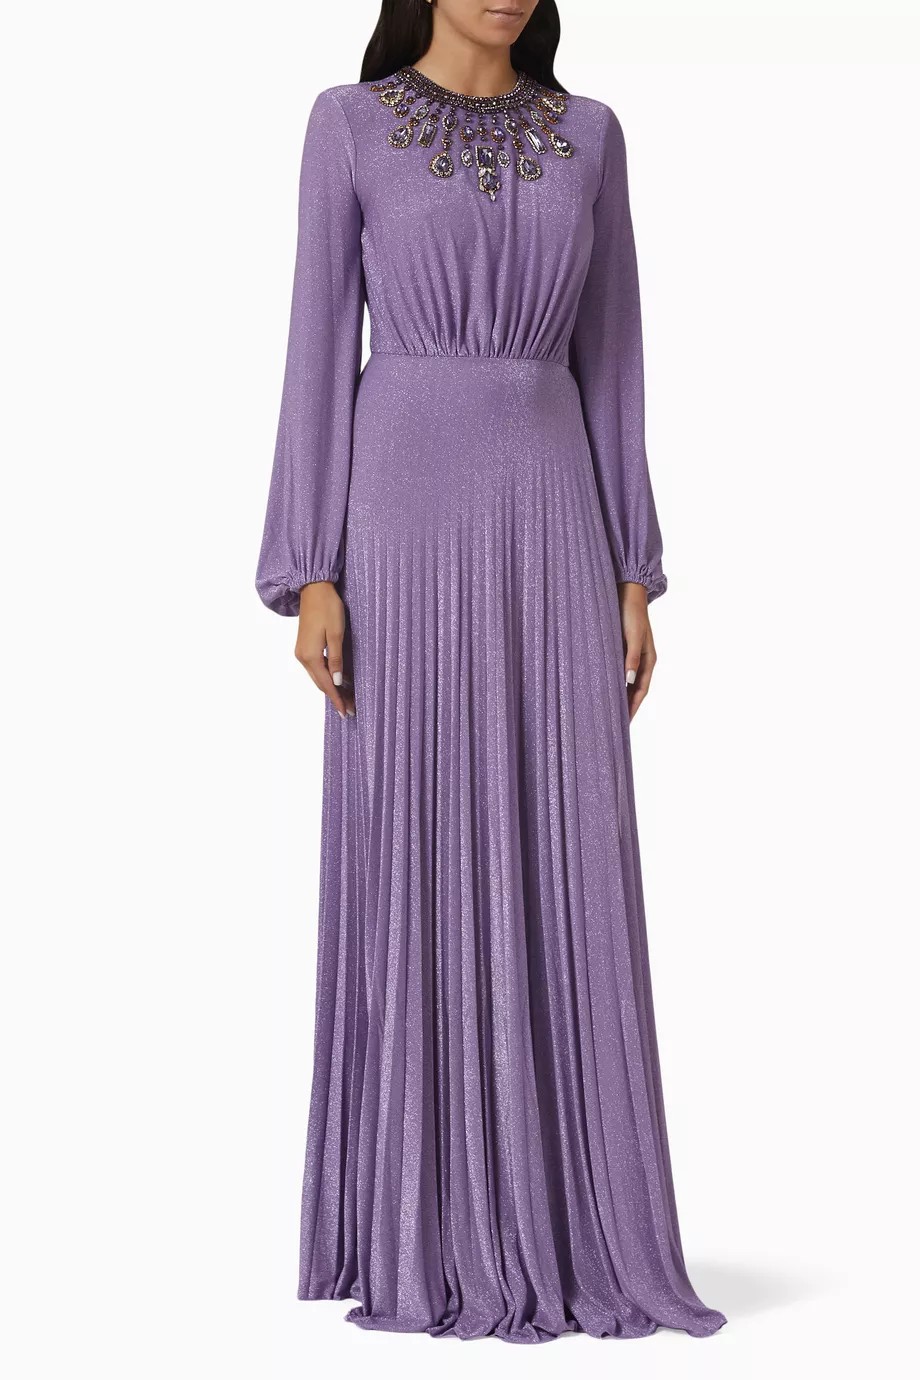 Elisabetta Franchi - Embellished Dress in Lurex Jersey - Purple